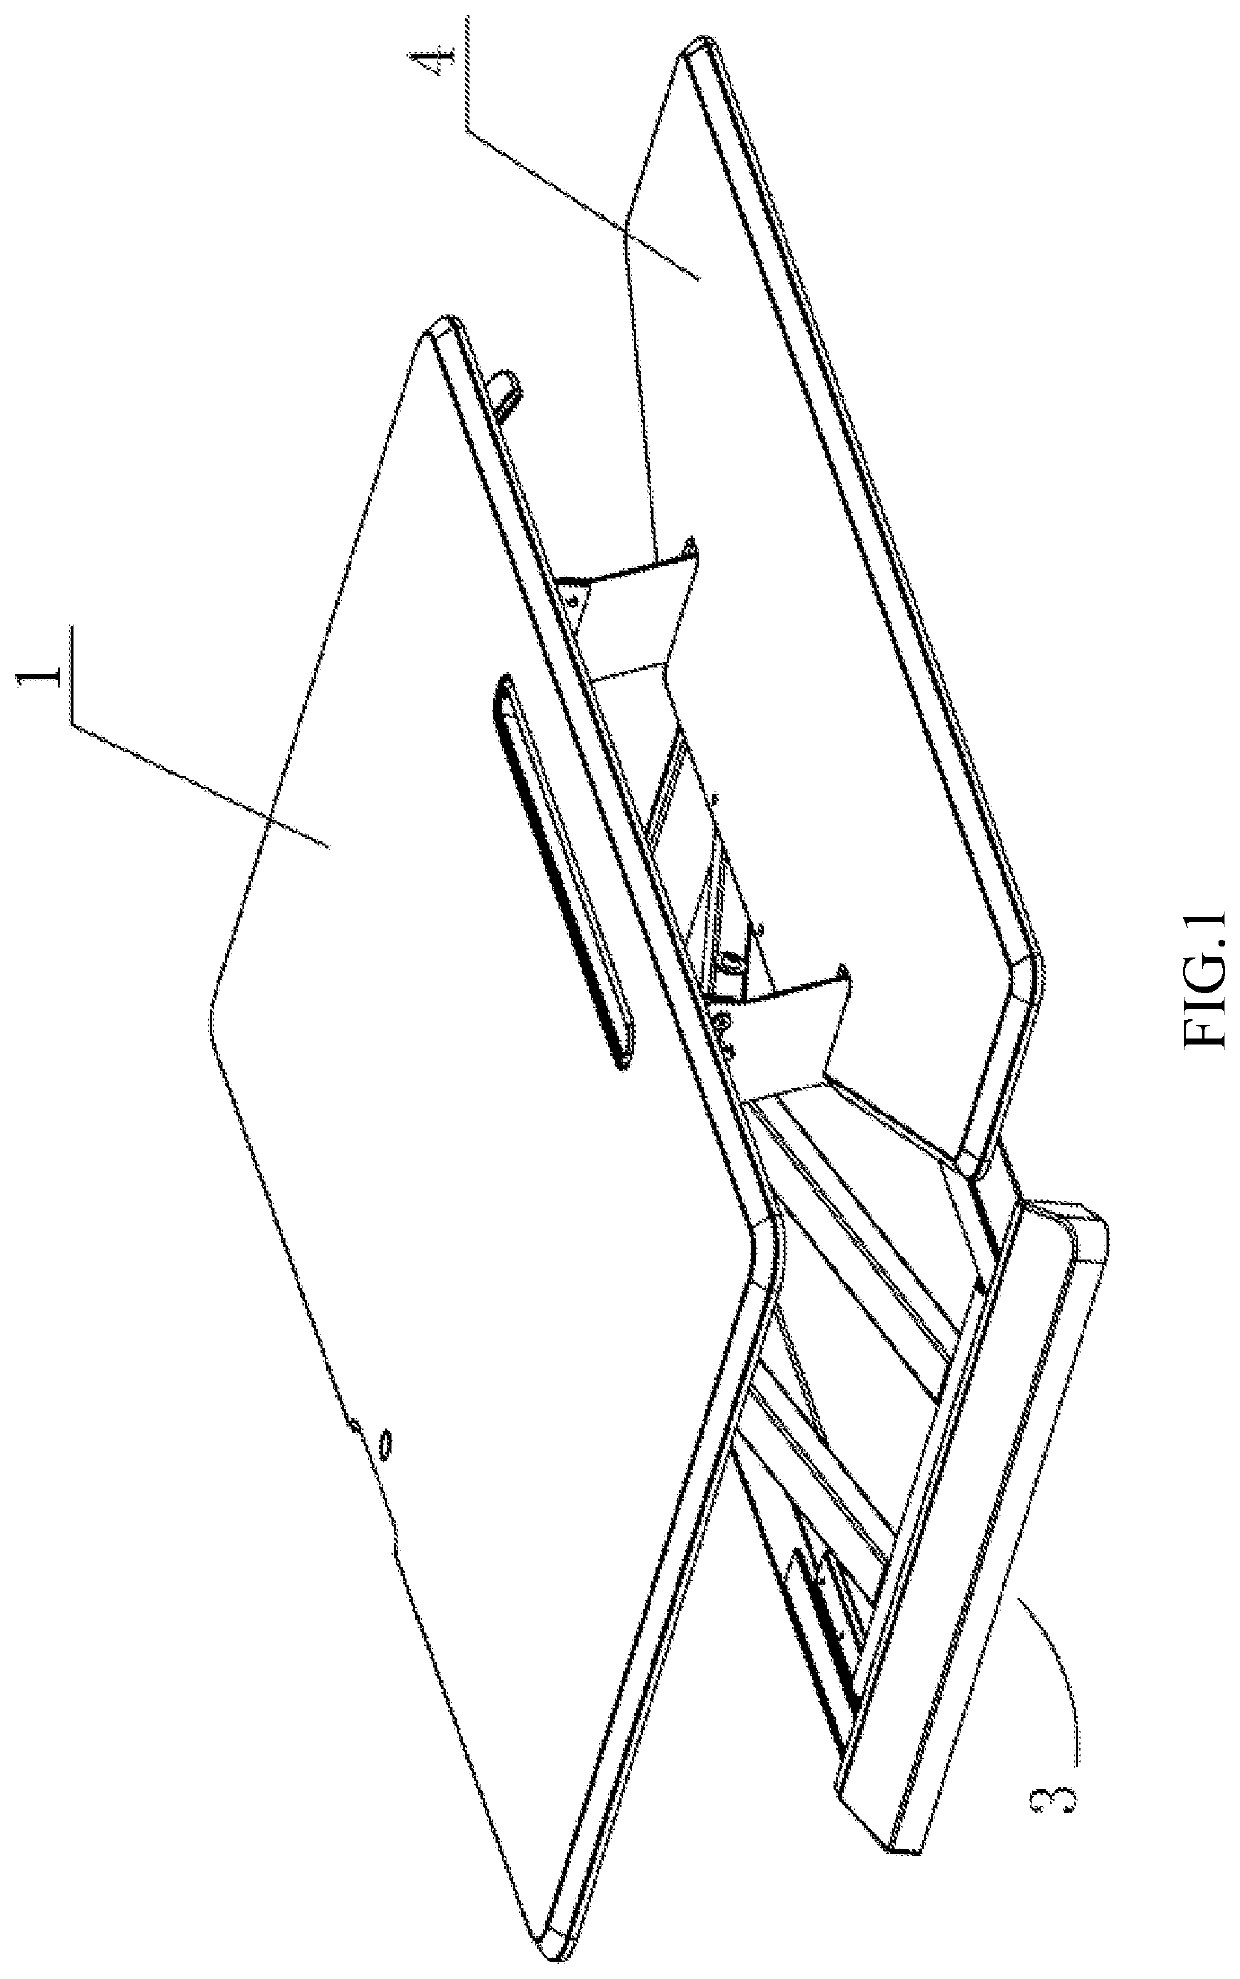 Desk-mounted lifting platform